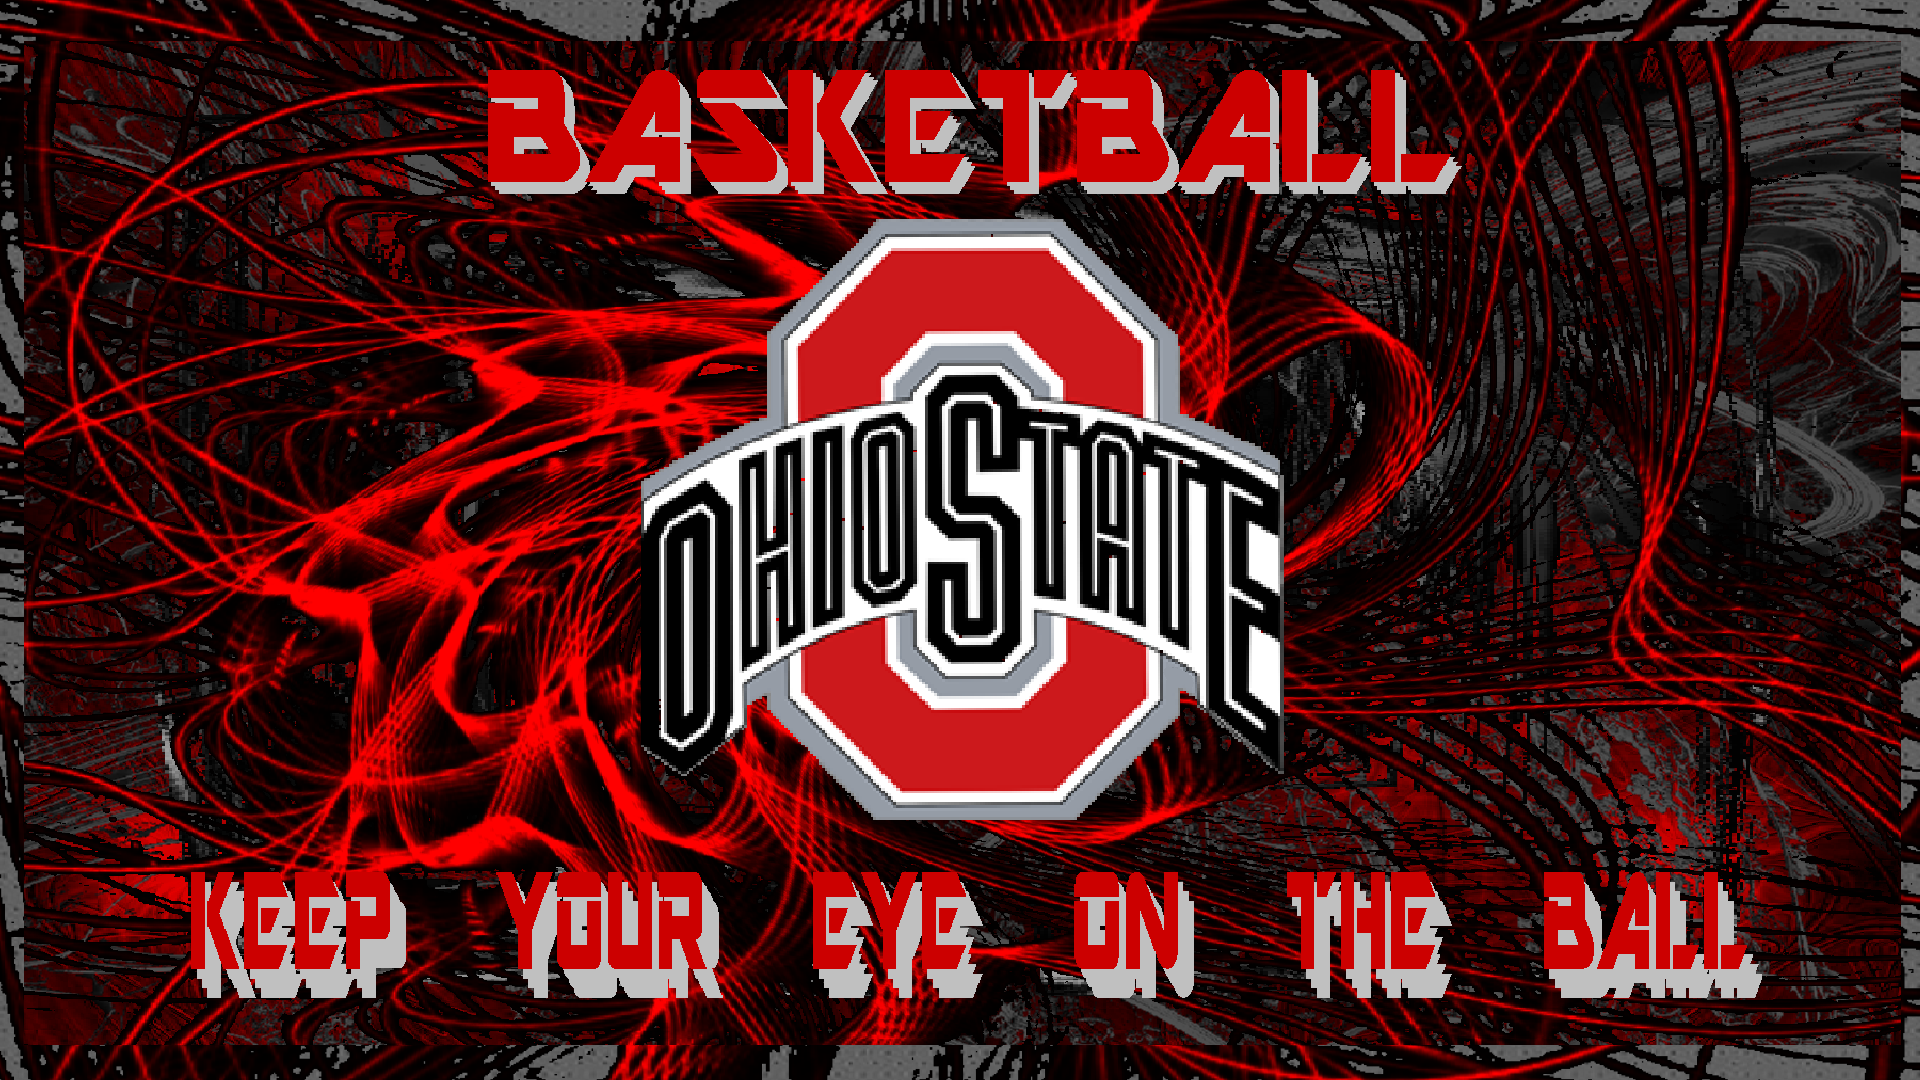  ball   Ohio State University Basketball Wallpaper 26922204 1920x1080